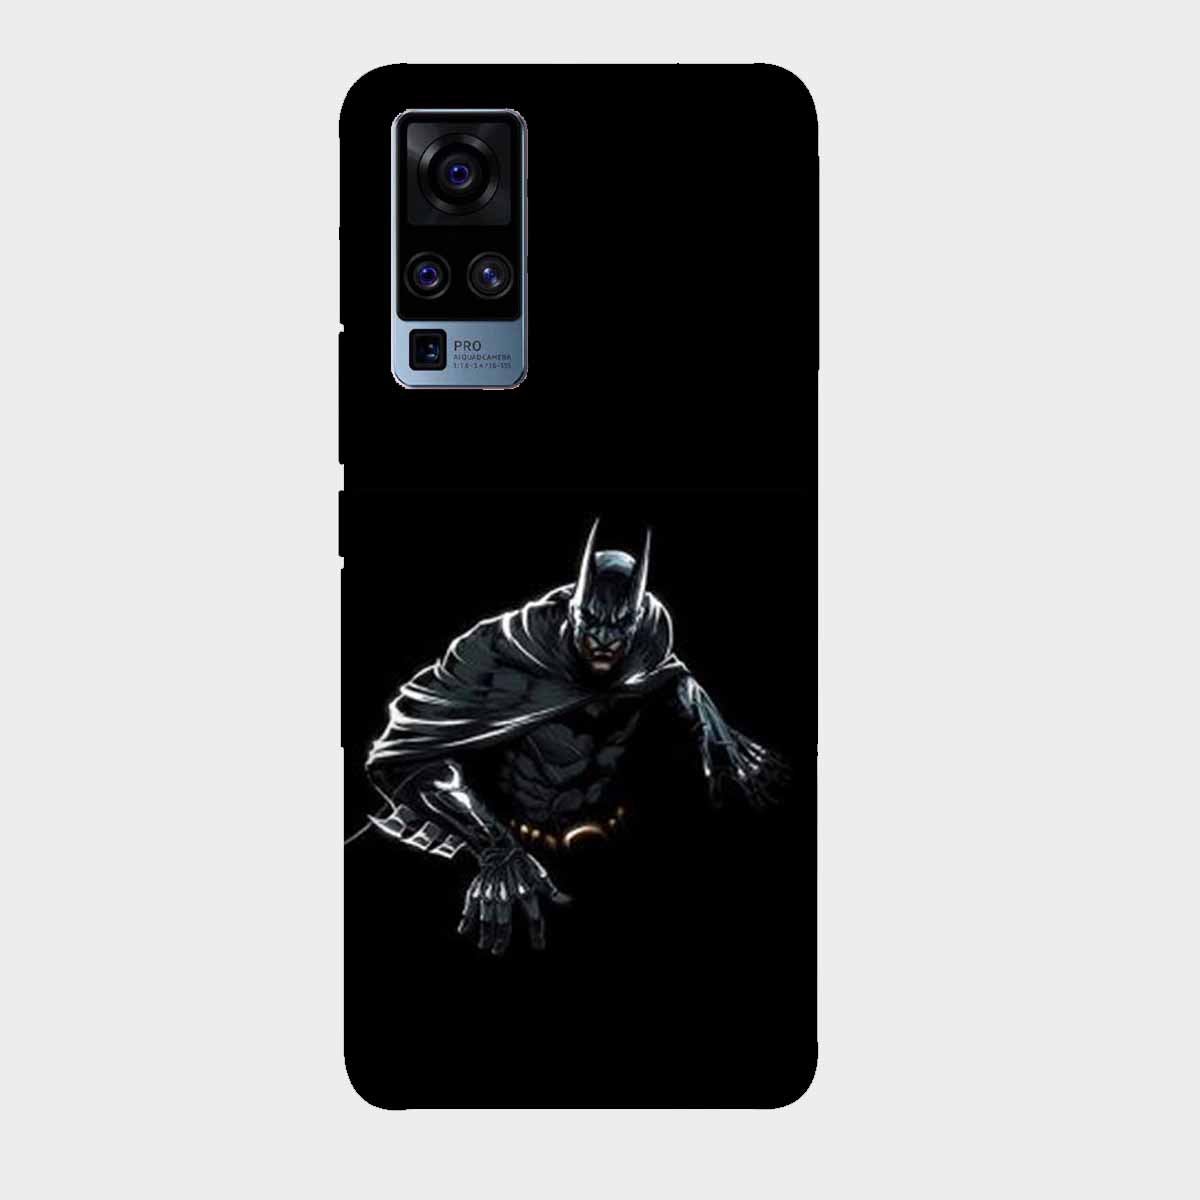 Batman - Ready for Action - Mobile Phone Cover - Hard Case - Vivo